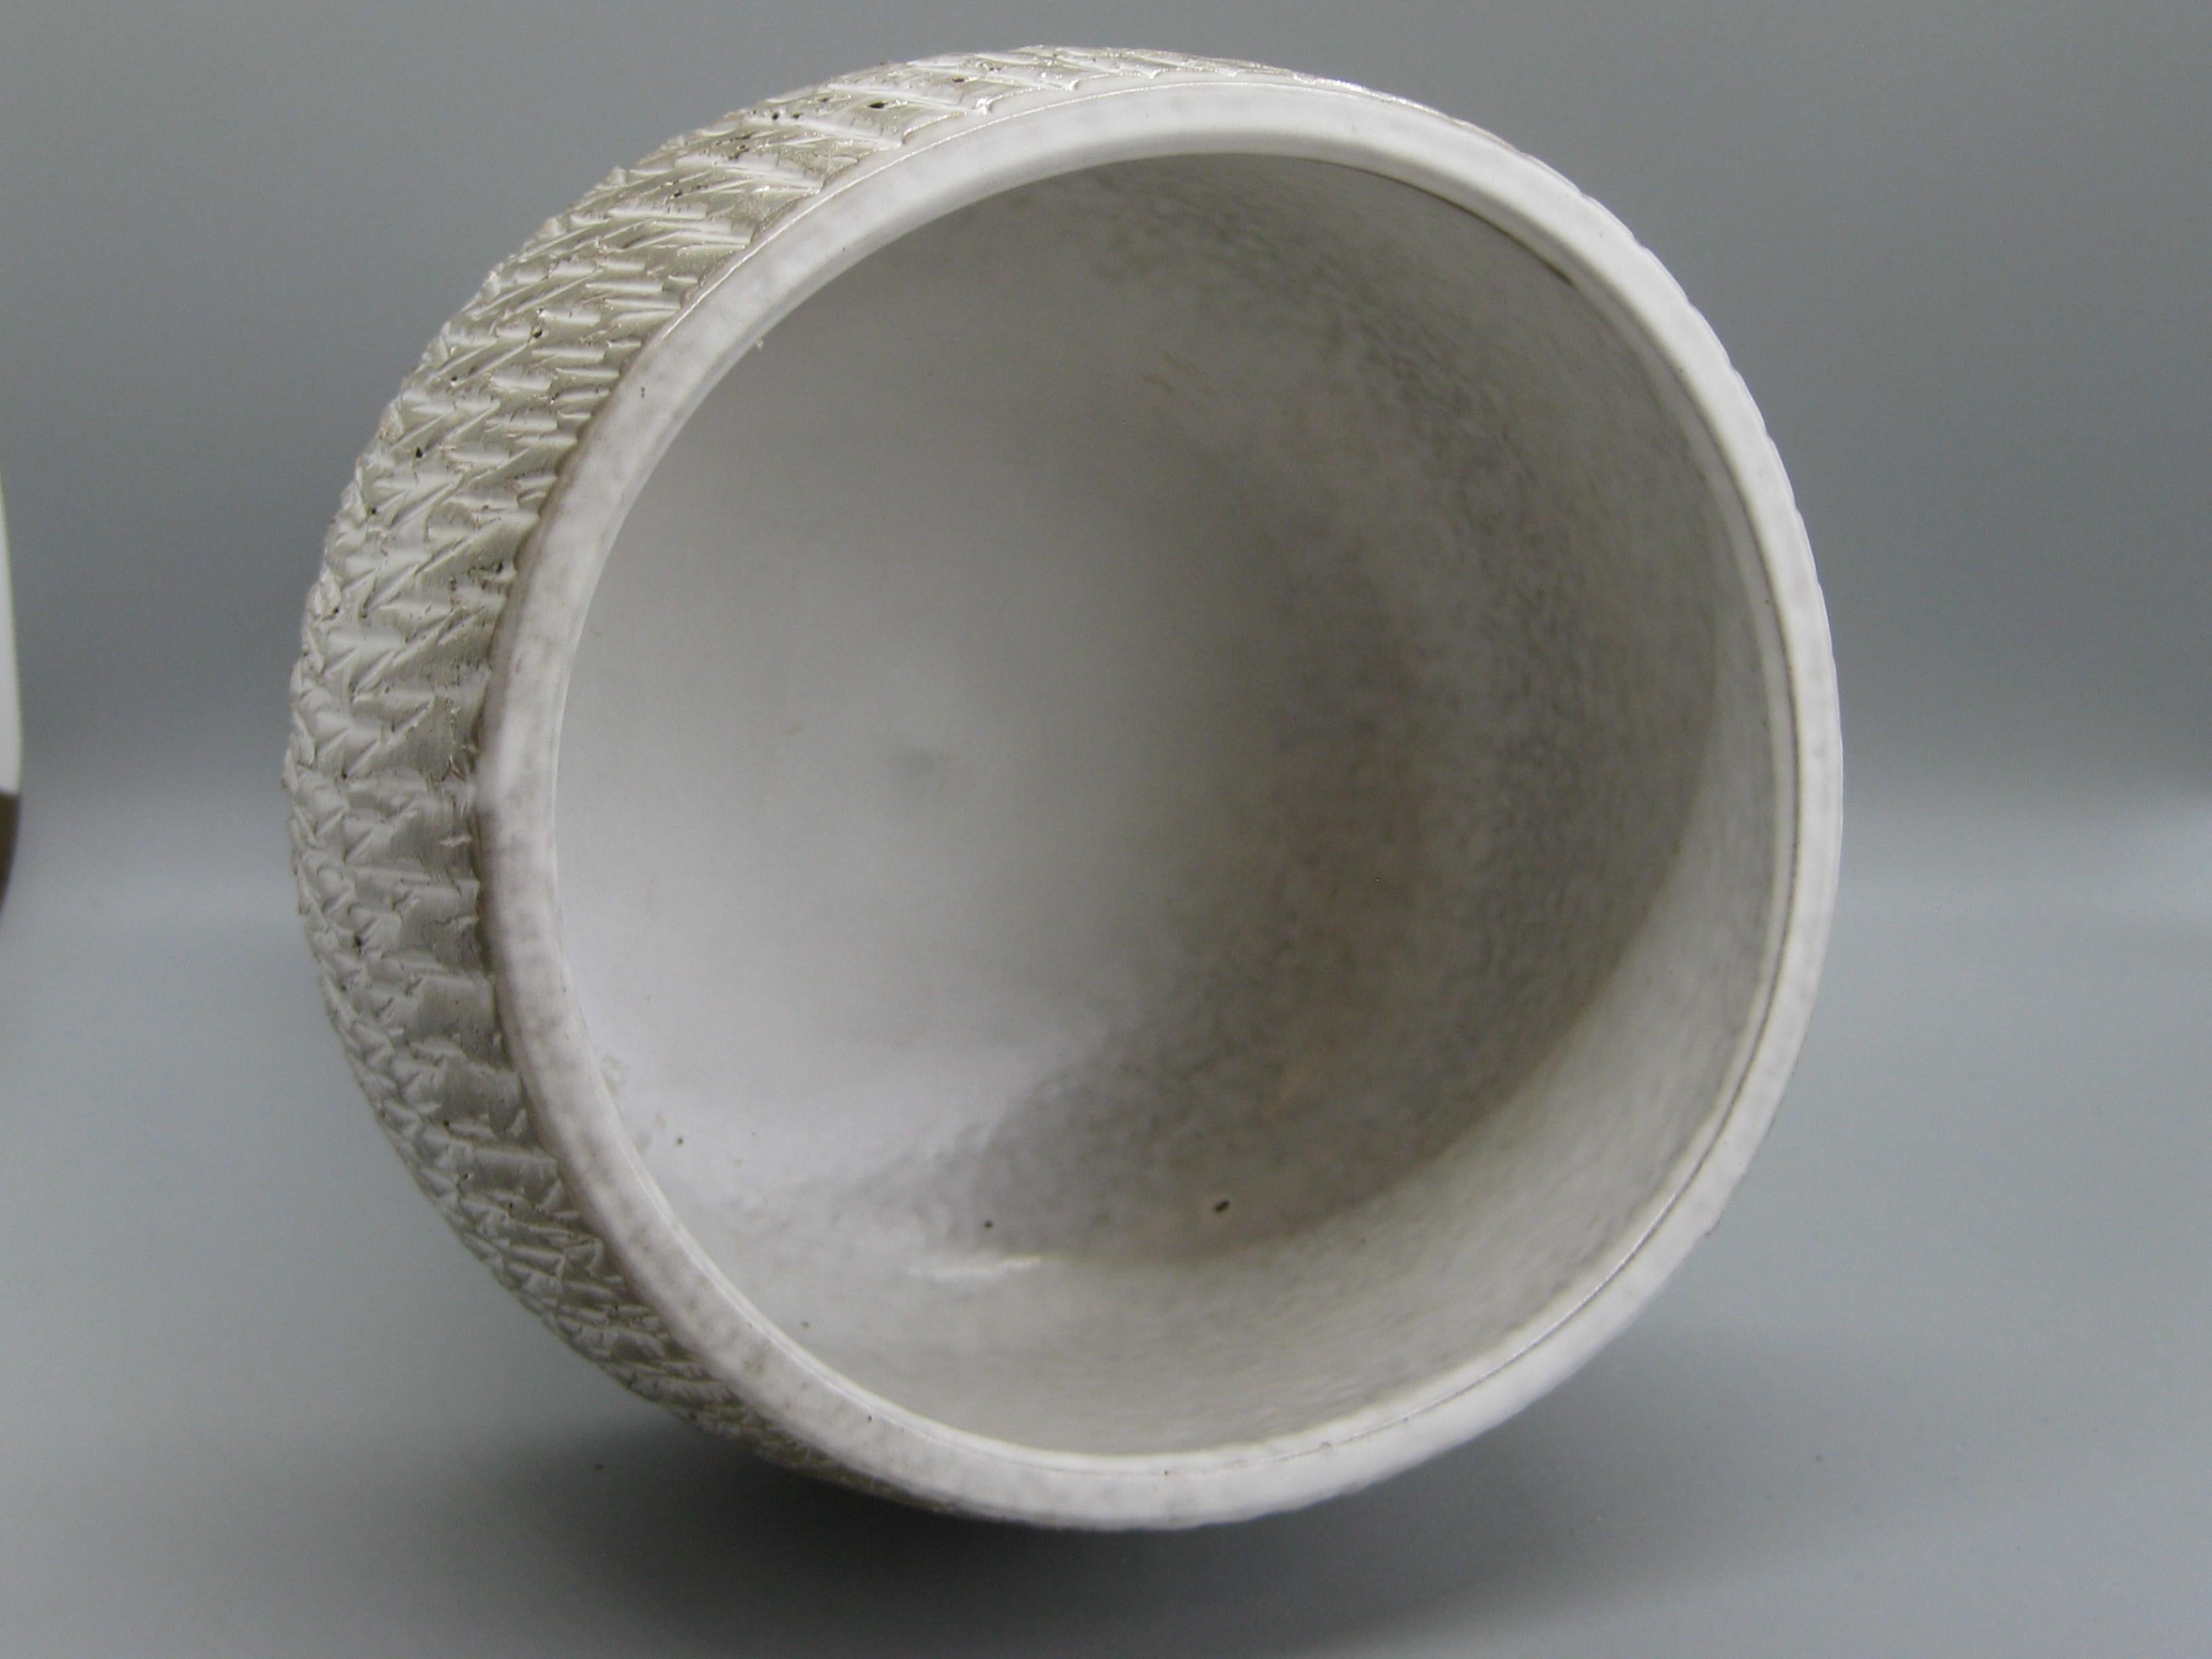 1960s Japanese Modernist Ikebana Ceramic Pottery Sgraffito Pedestal Vase Vessel For Sale 3